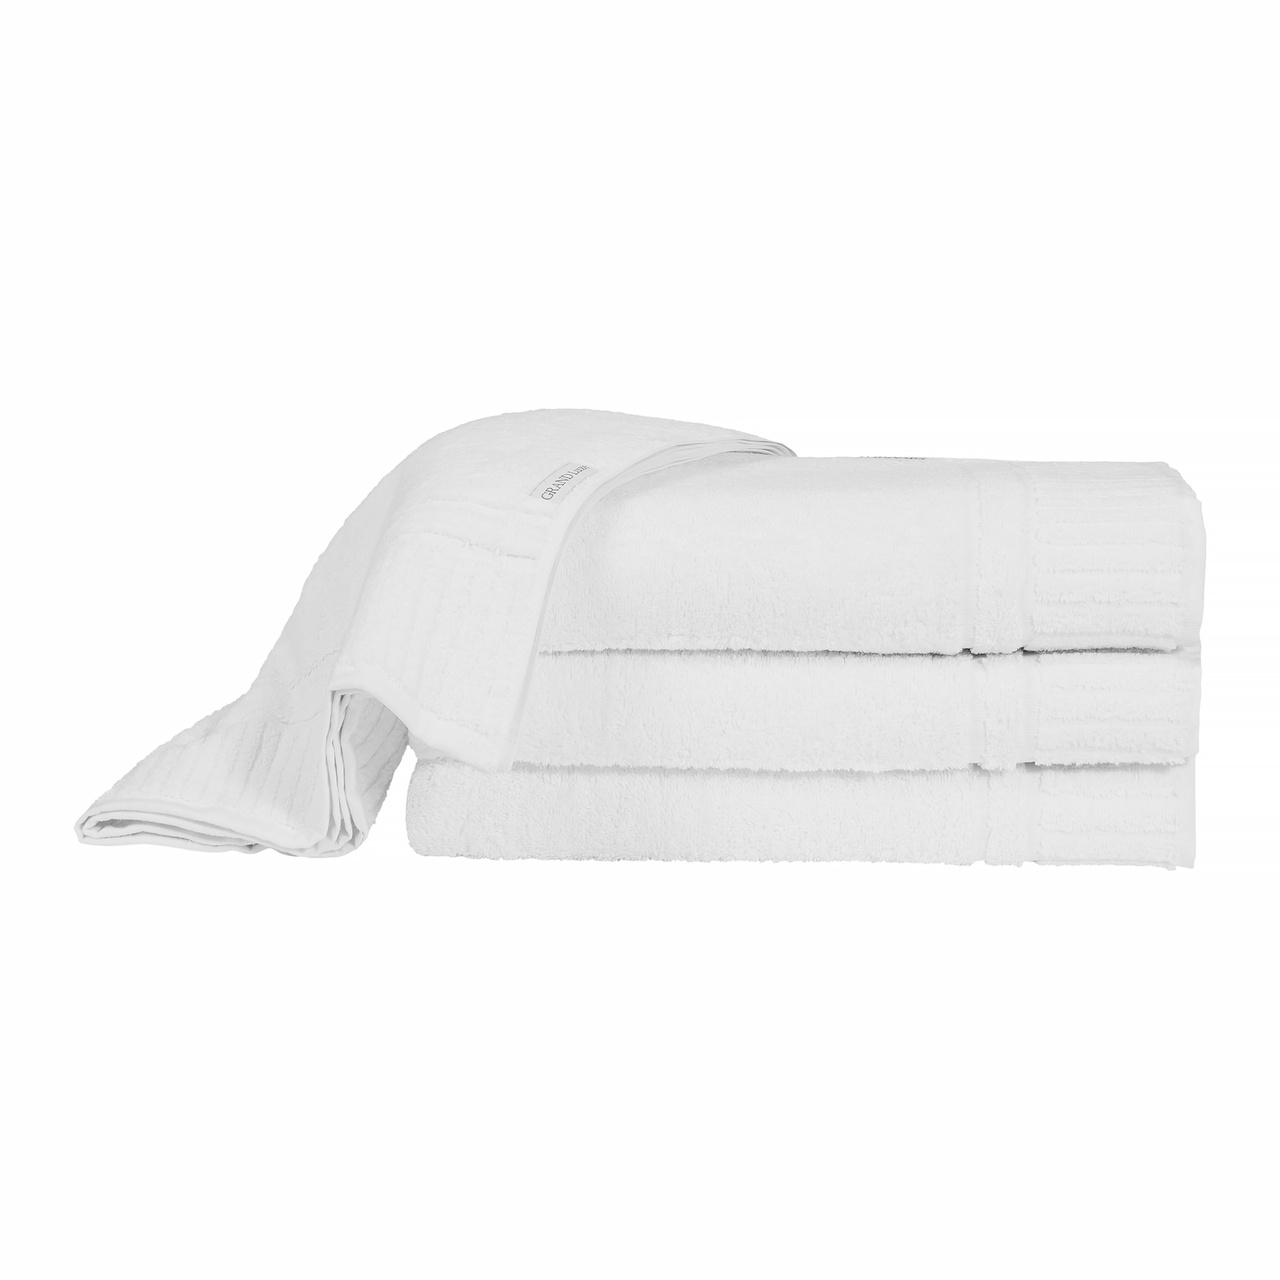 Towel Grand Luxe White 70x140 cm 500 g